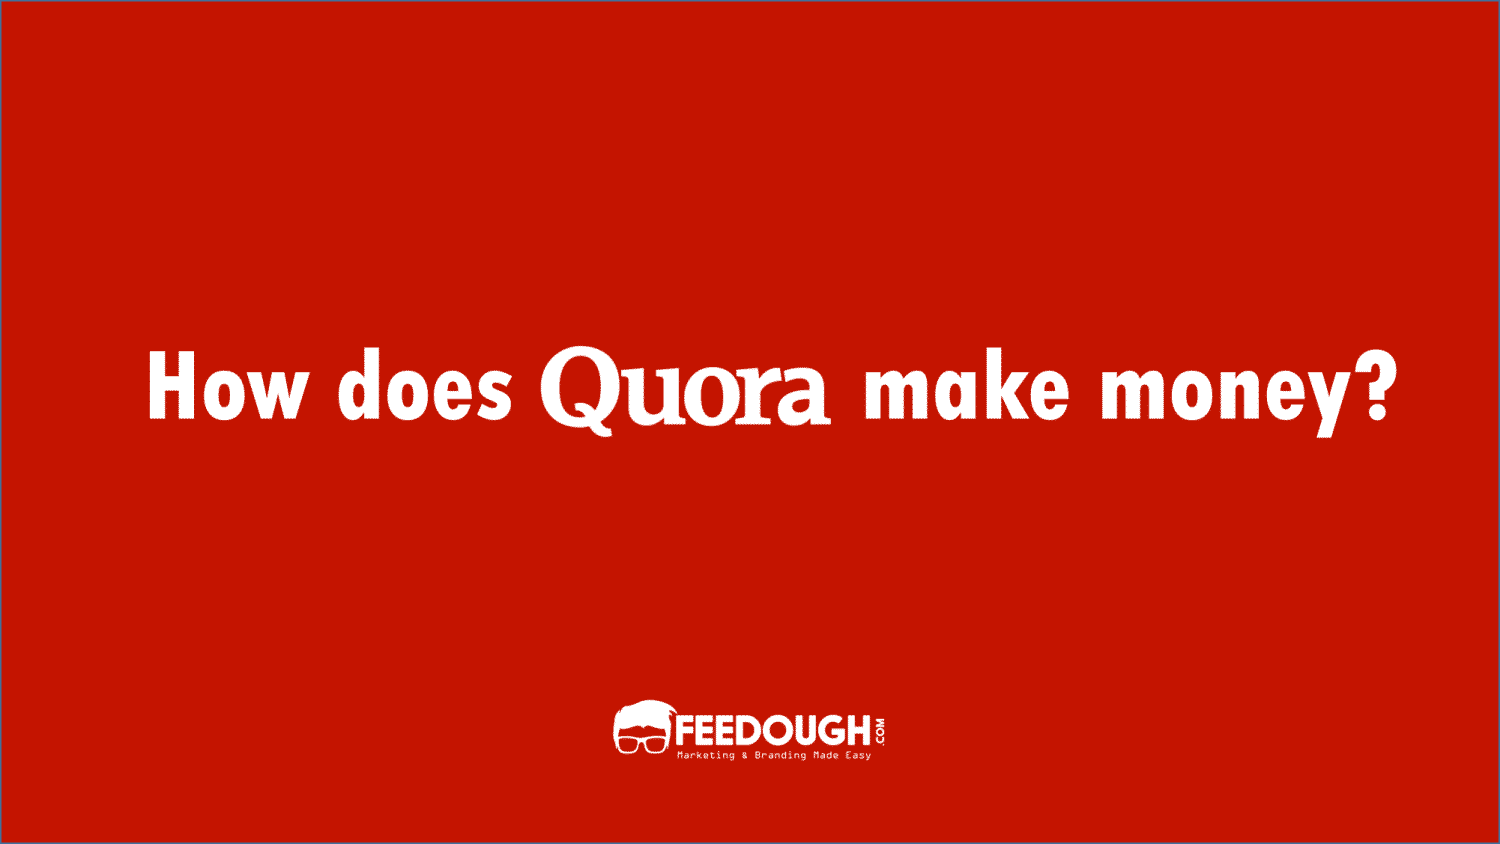 quora business model